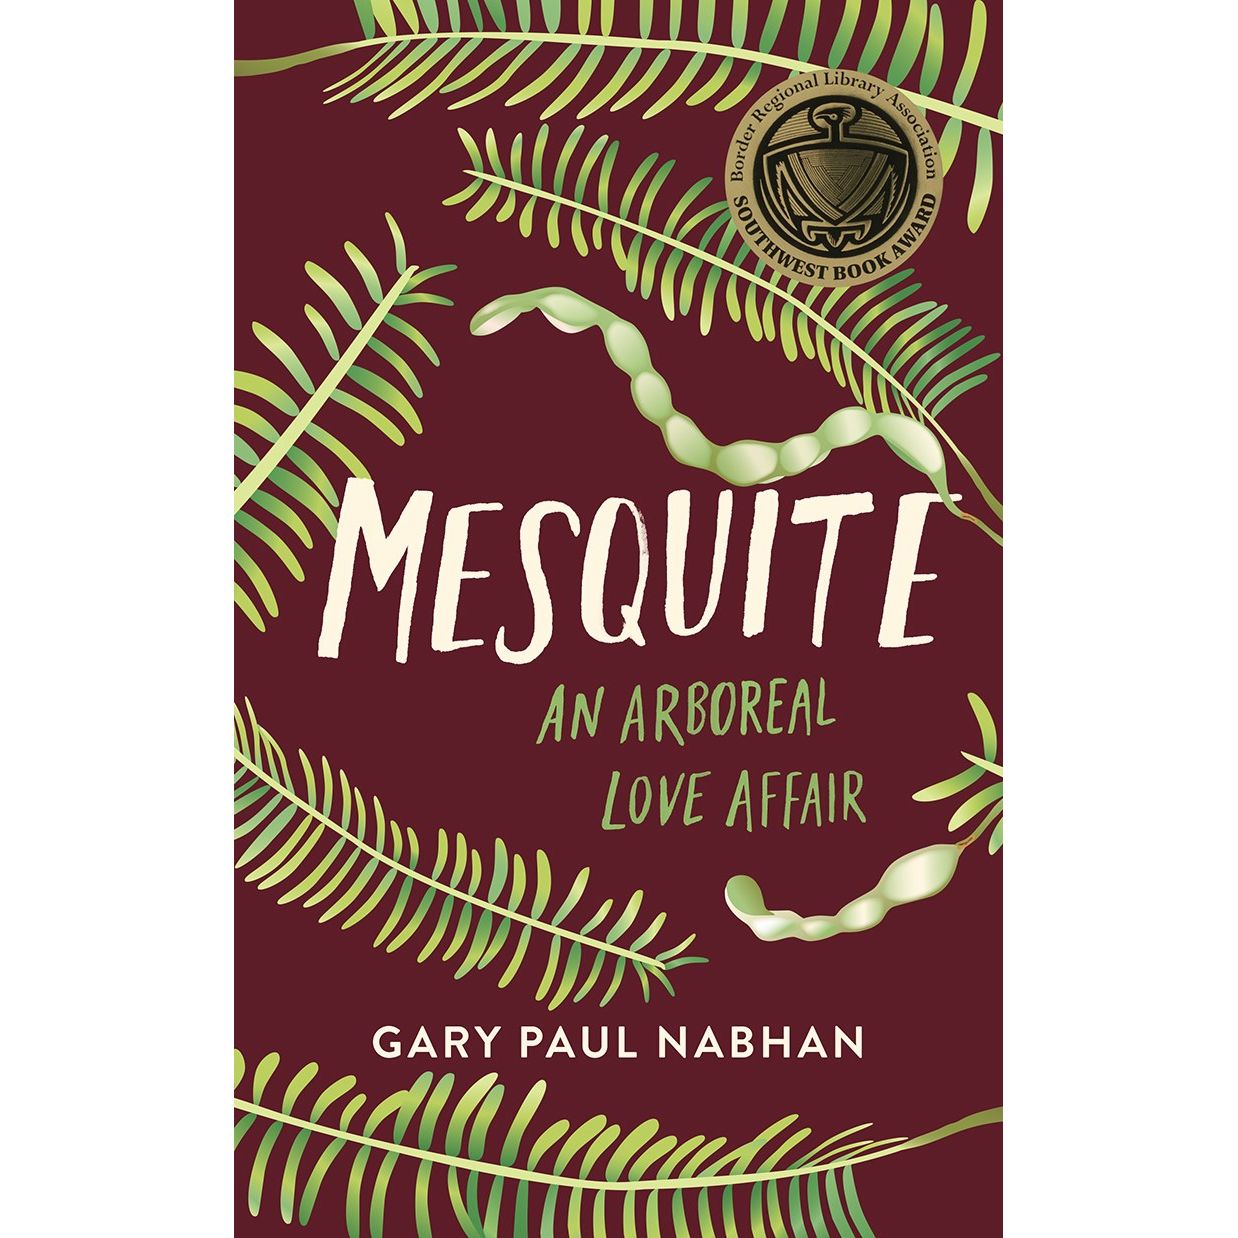 Mesquite: An Arboreal Love Affair (Gary Paul Nabhan)